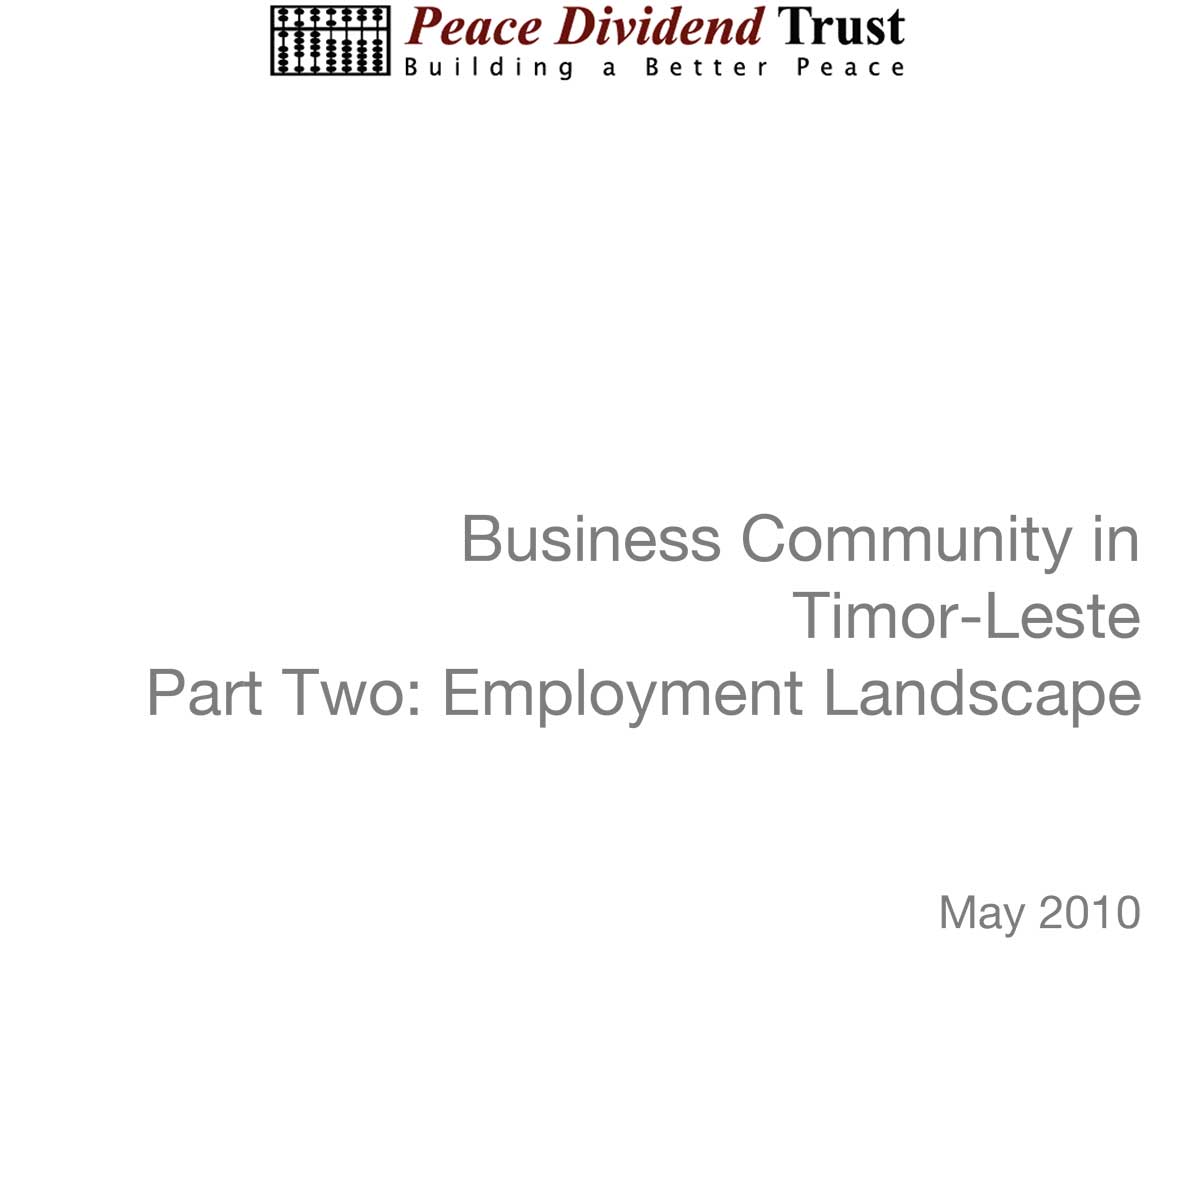 Timor-Leste Business Community Overview Part II (2010)